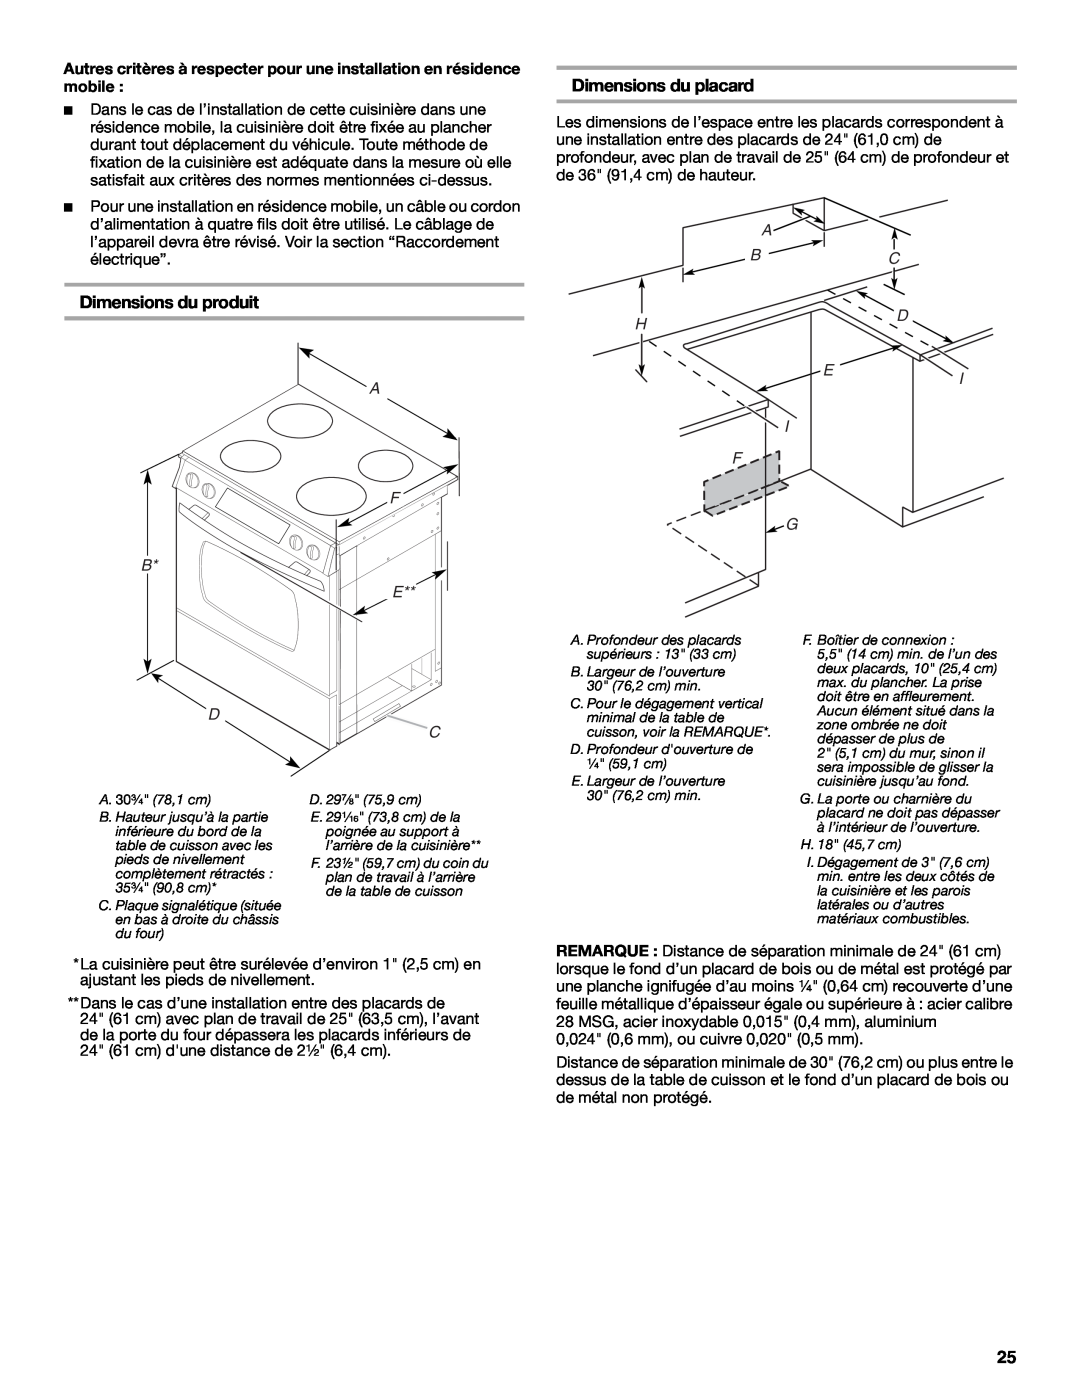 Jenn-Air W10253462A installation instructions Dimensions du placard, Dimensions du produit, A F B E, A Bc, Ei I F G 